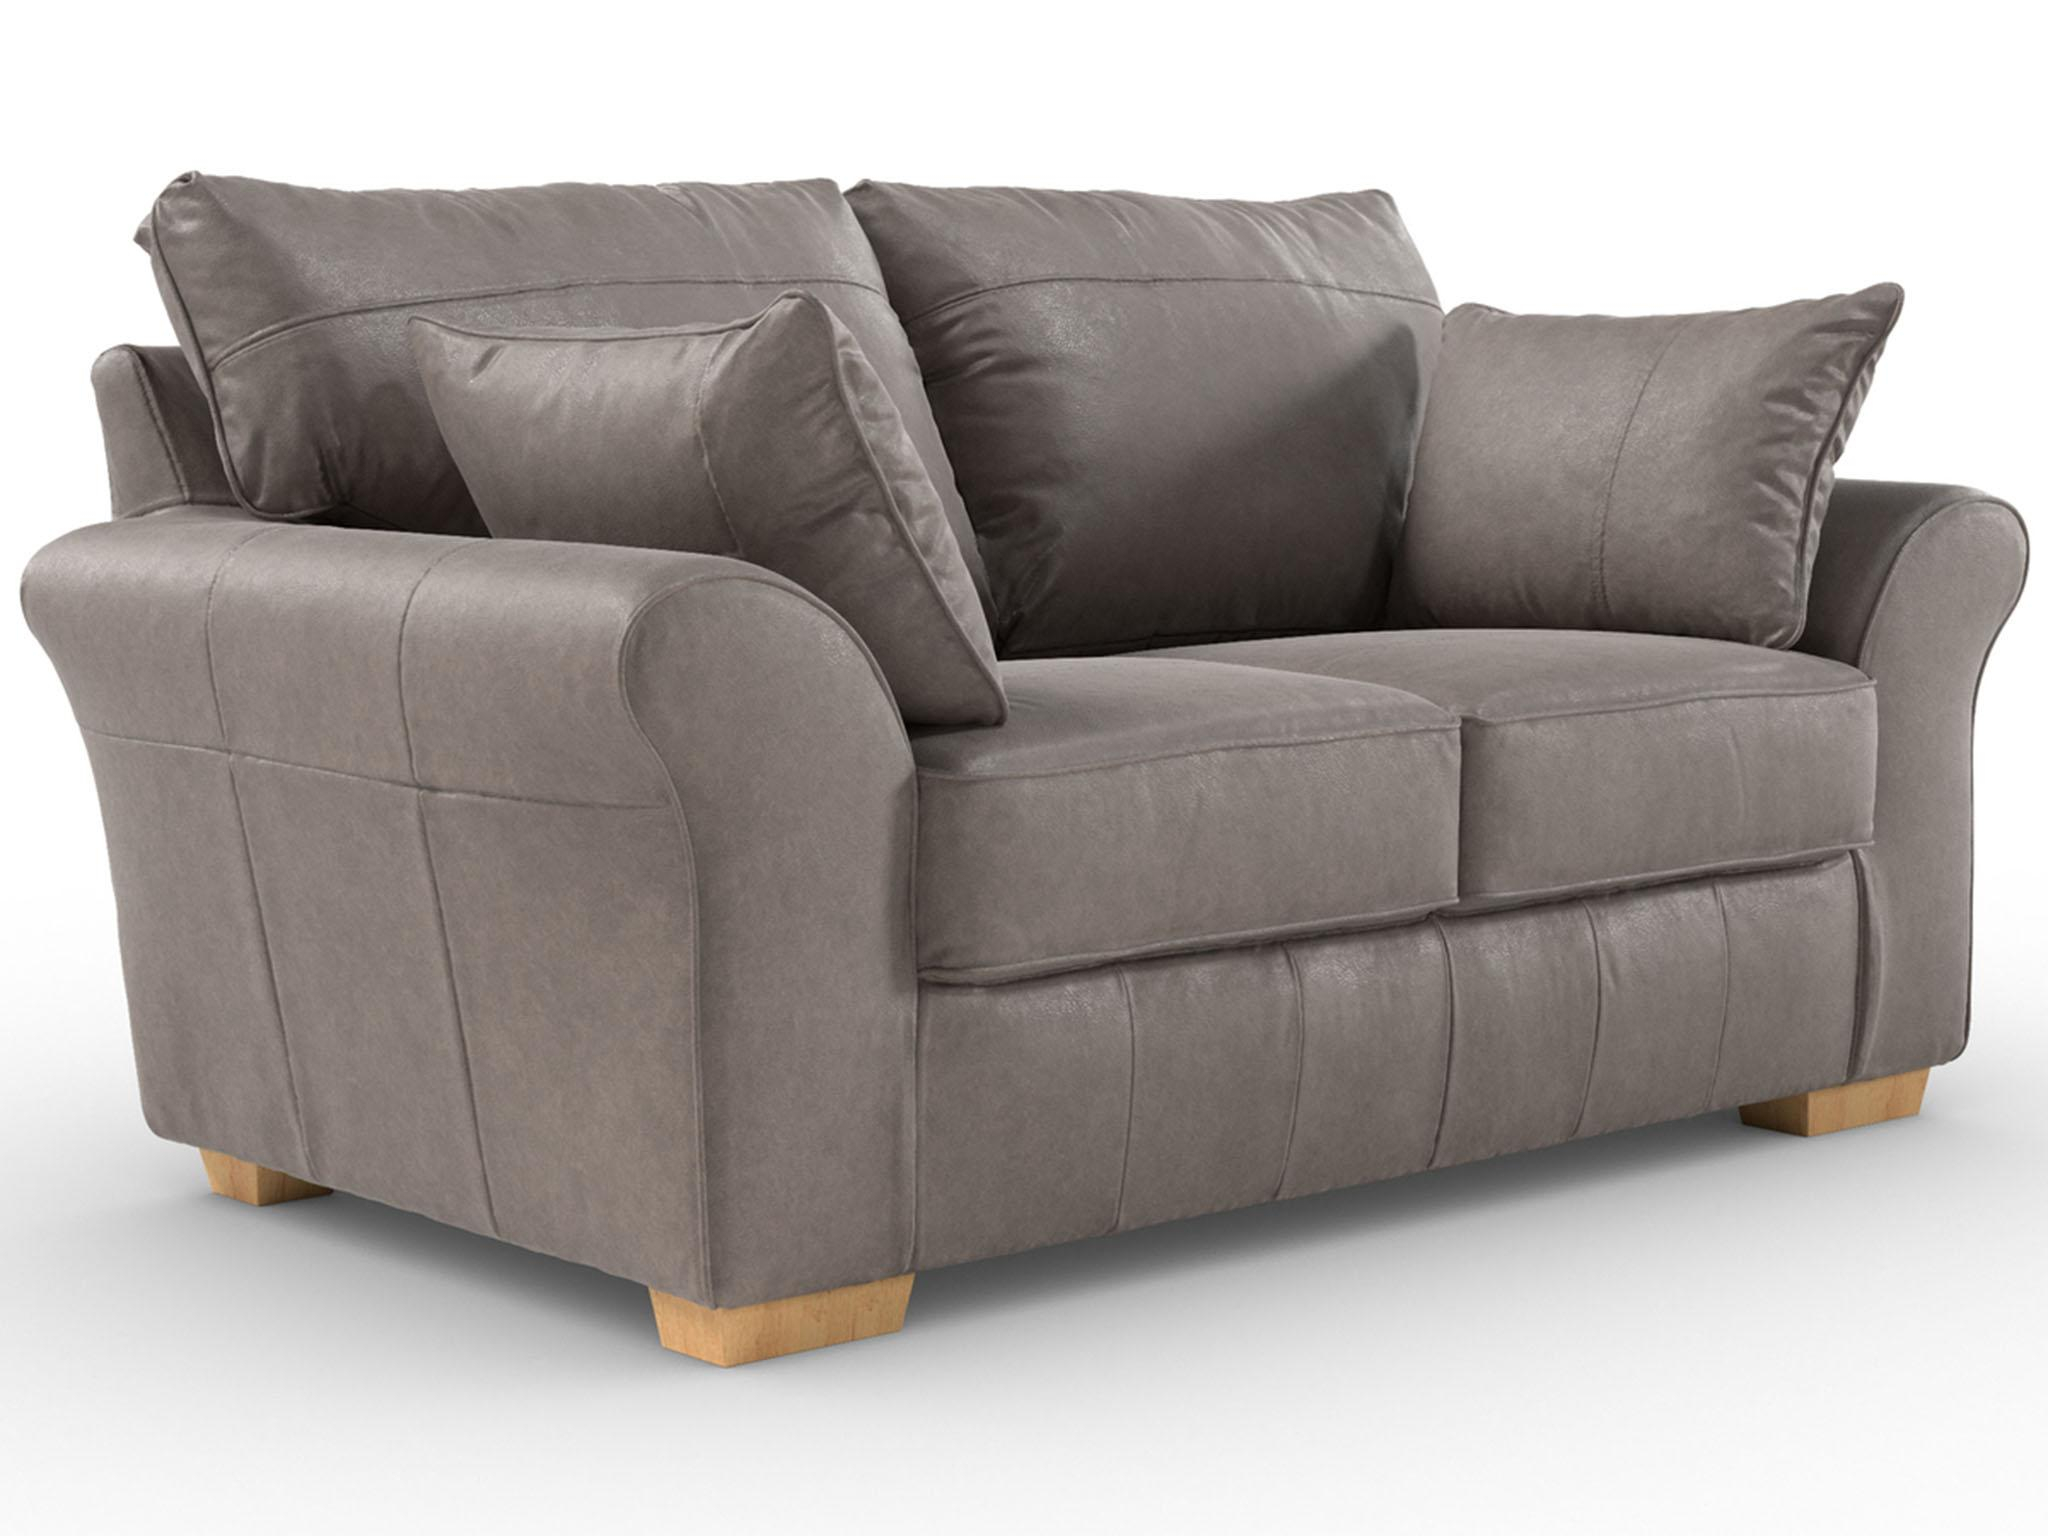 custom leather sofa uk